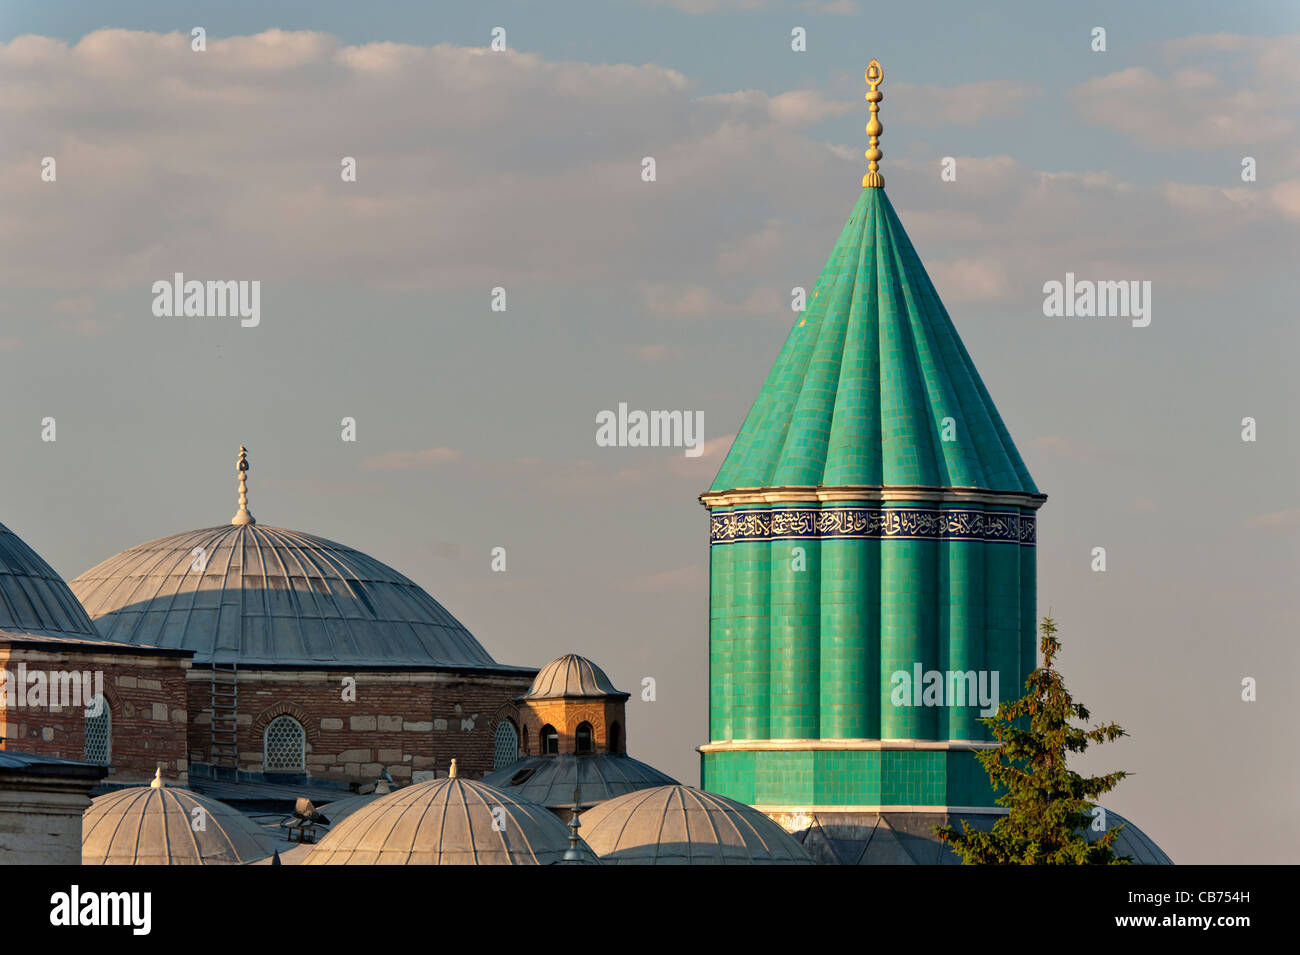 Turbe ( Tombeau ) de MEVLANA CELALEDDIN Rumi et Haci Bektas Konya Turquie Mosquée Banque D'Images